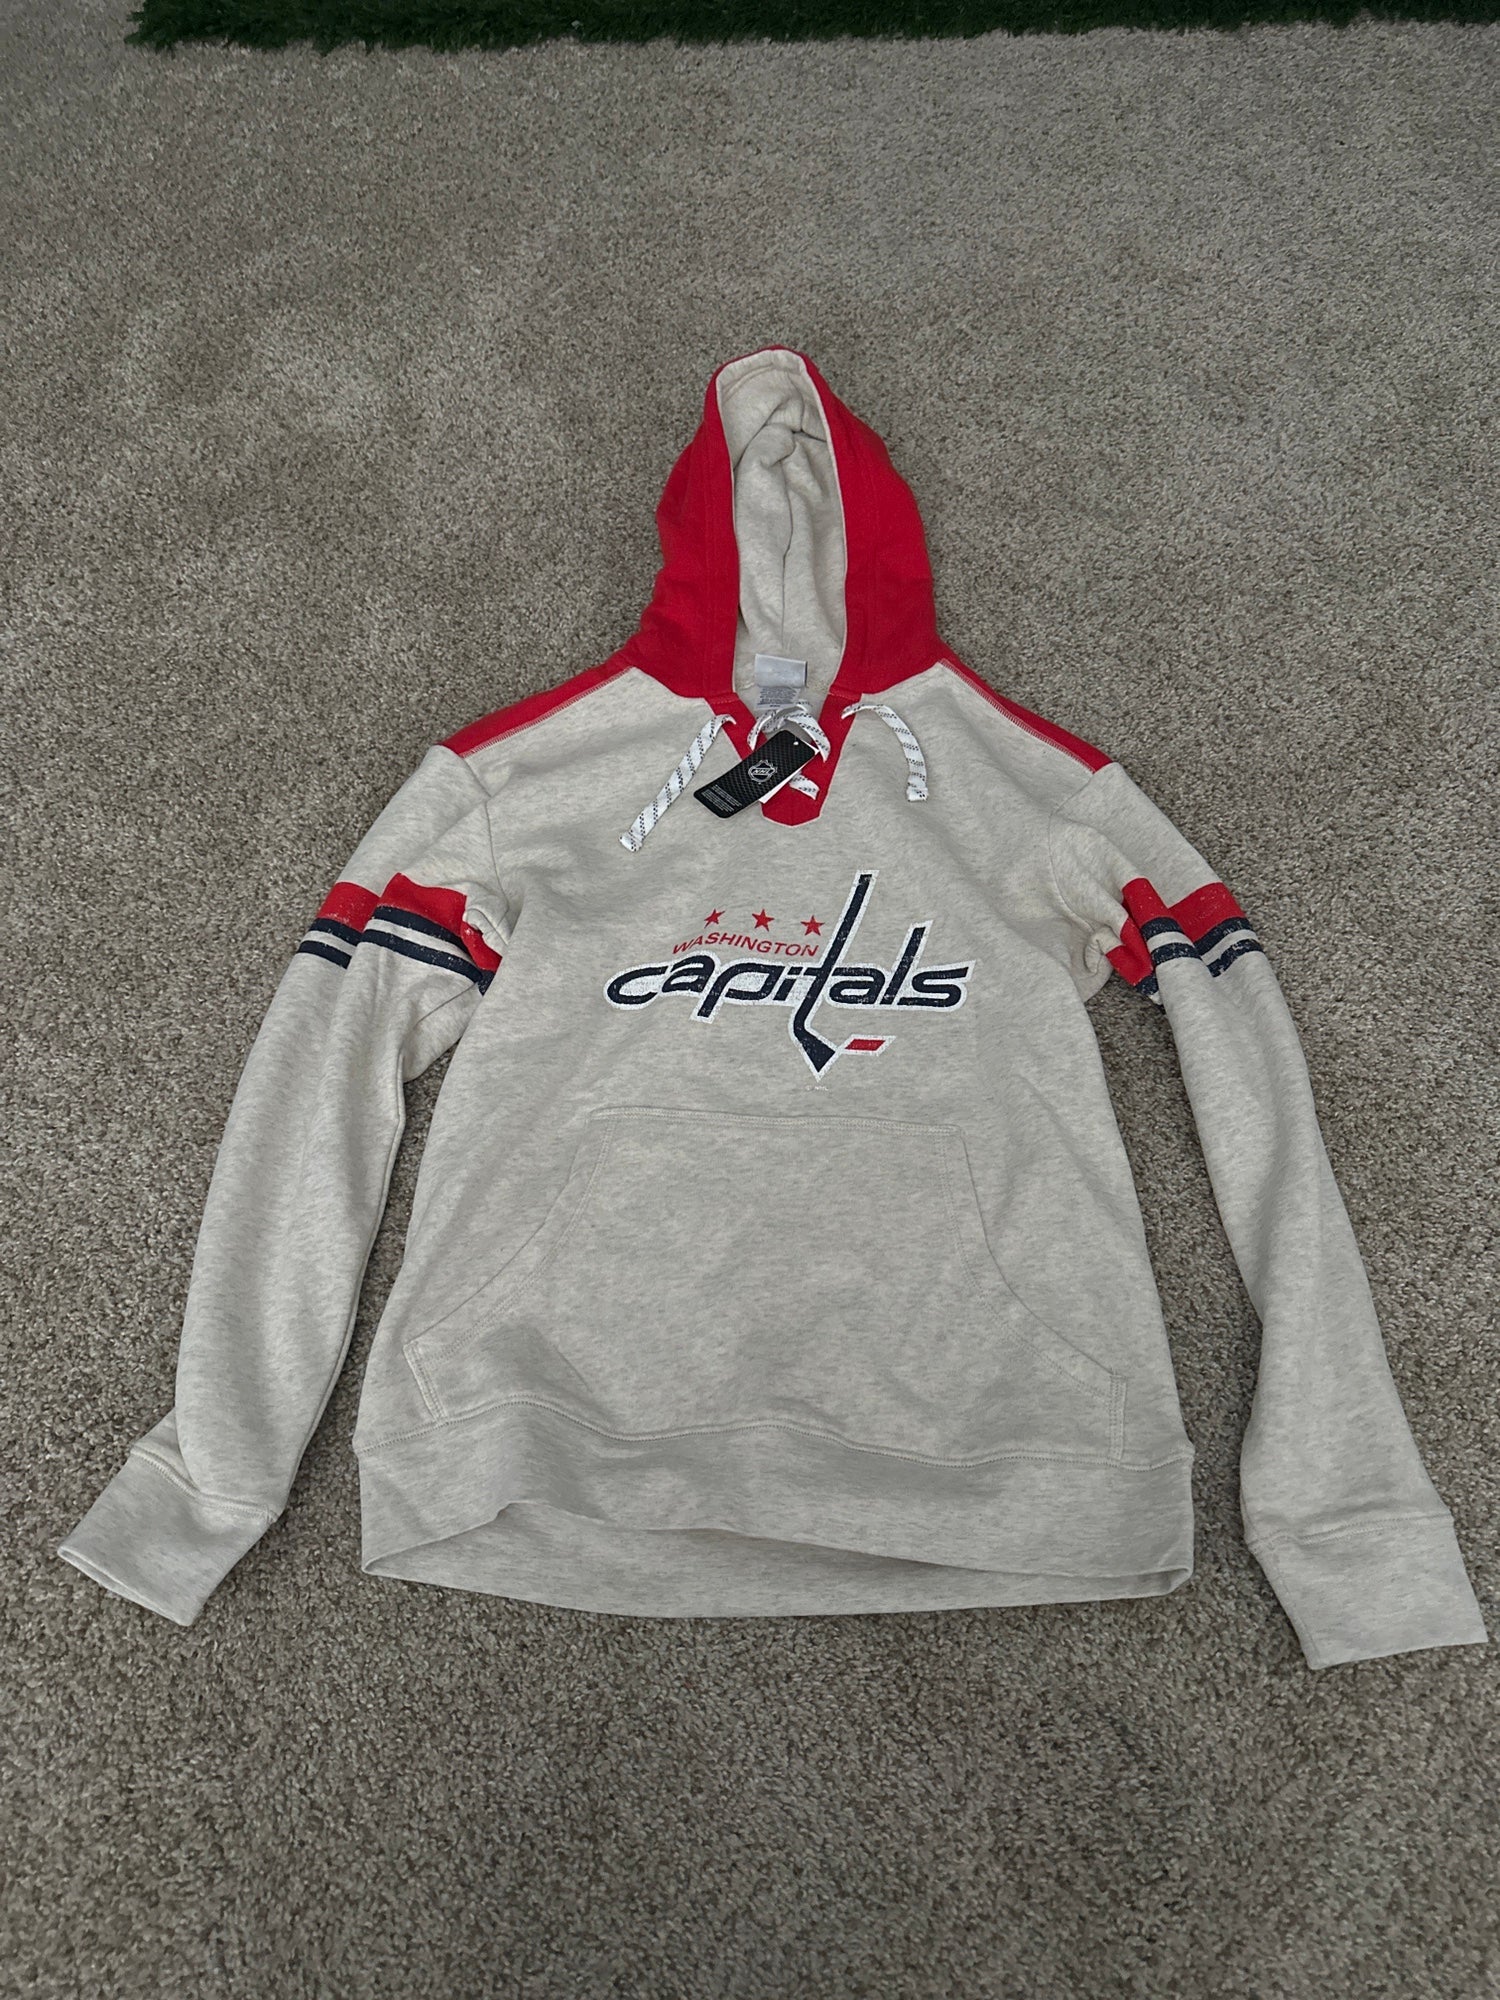 Washington Capitals hoodie